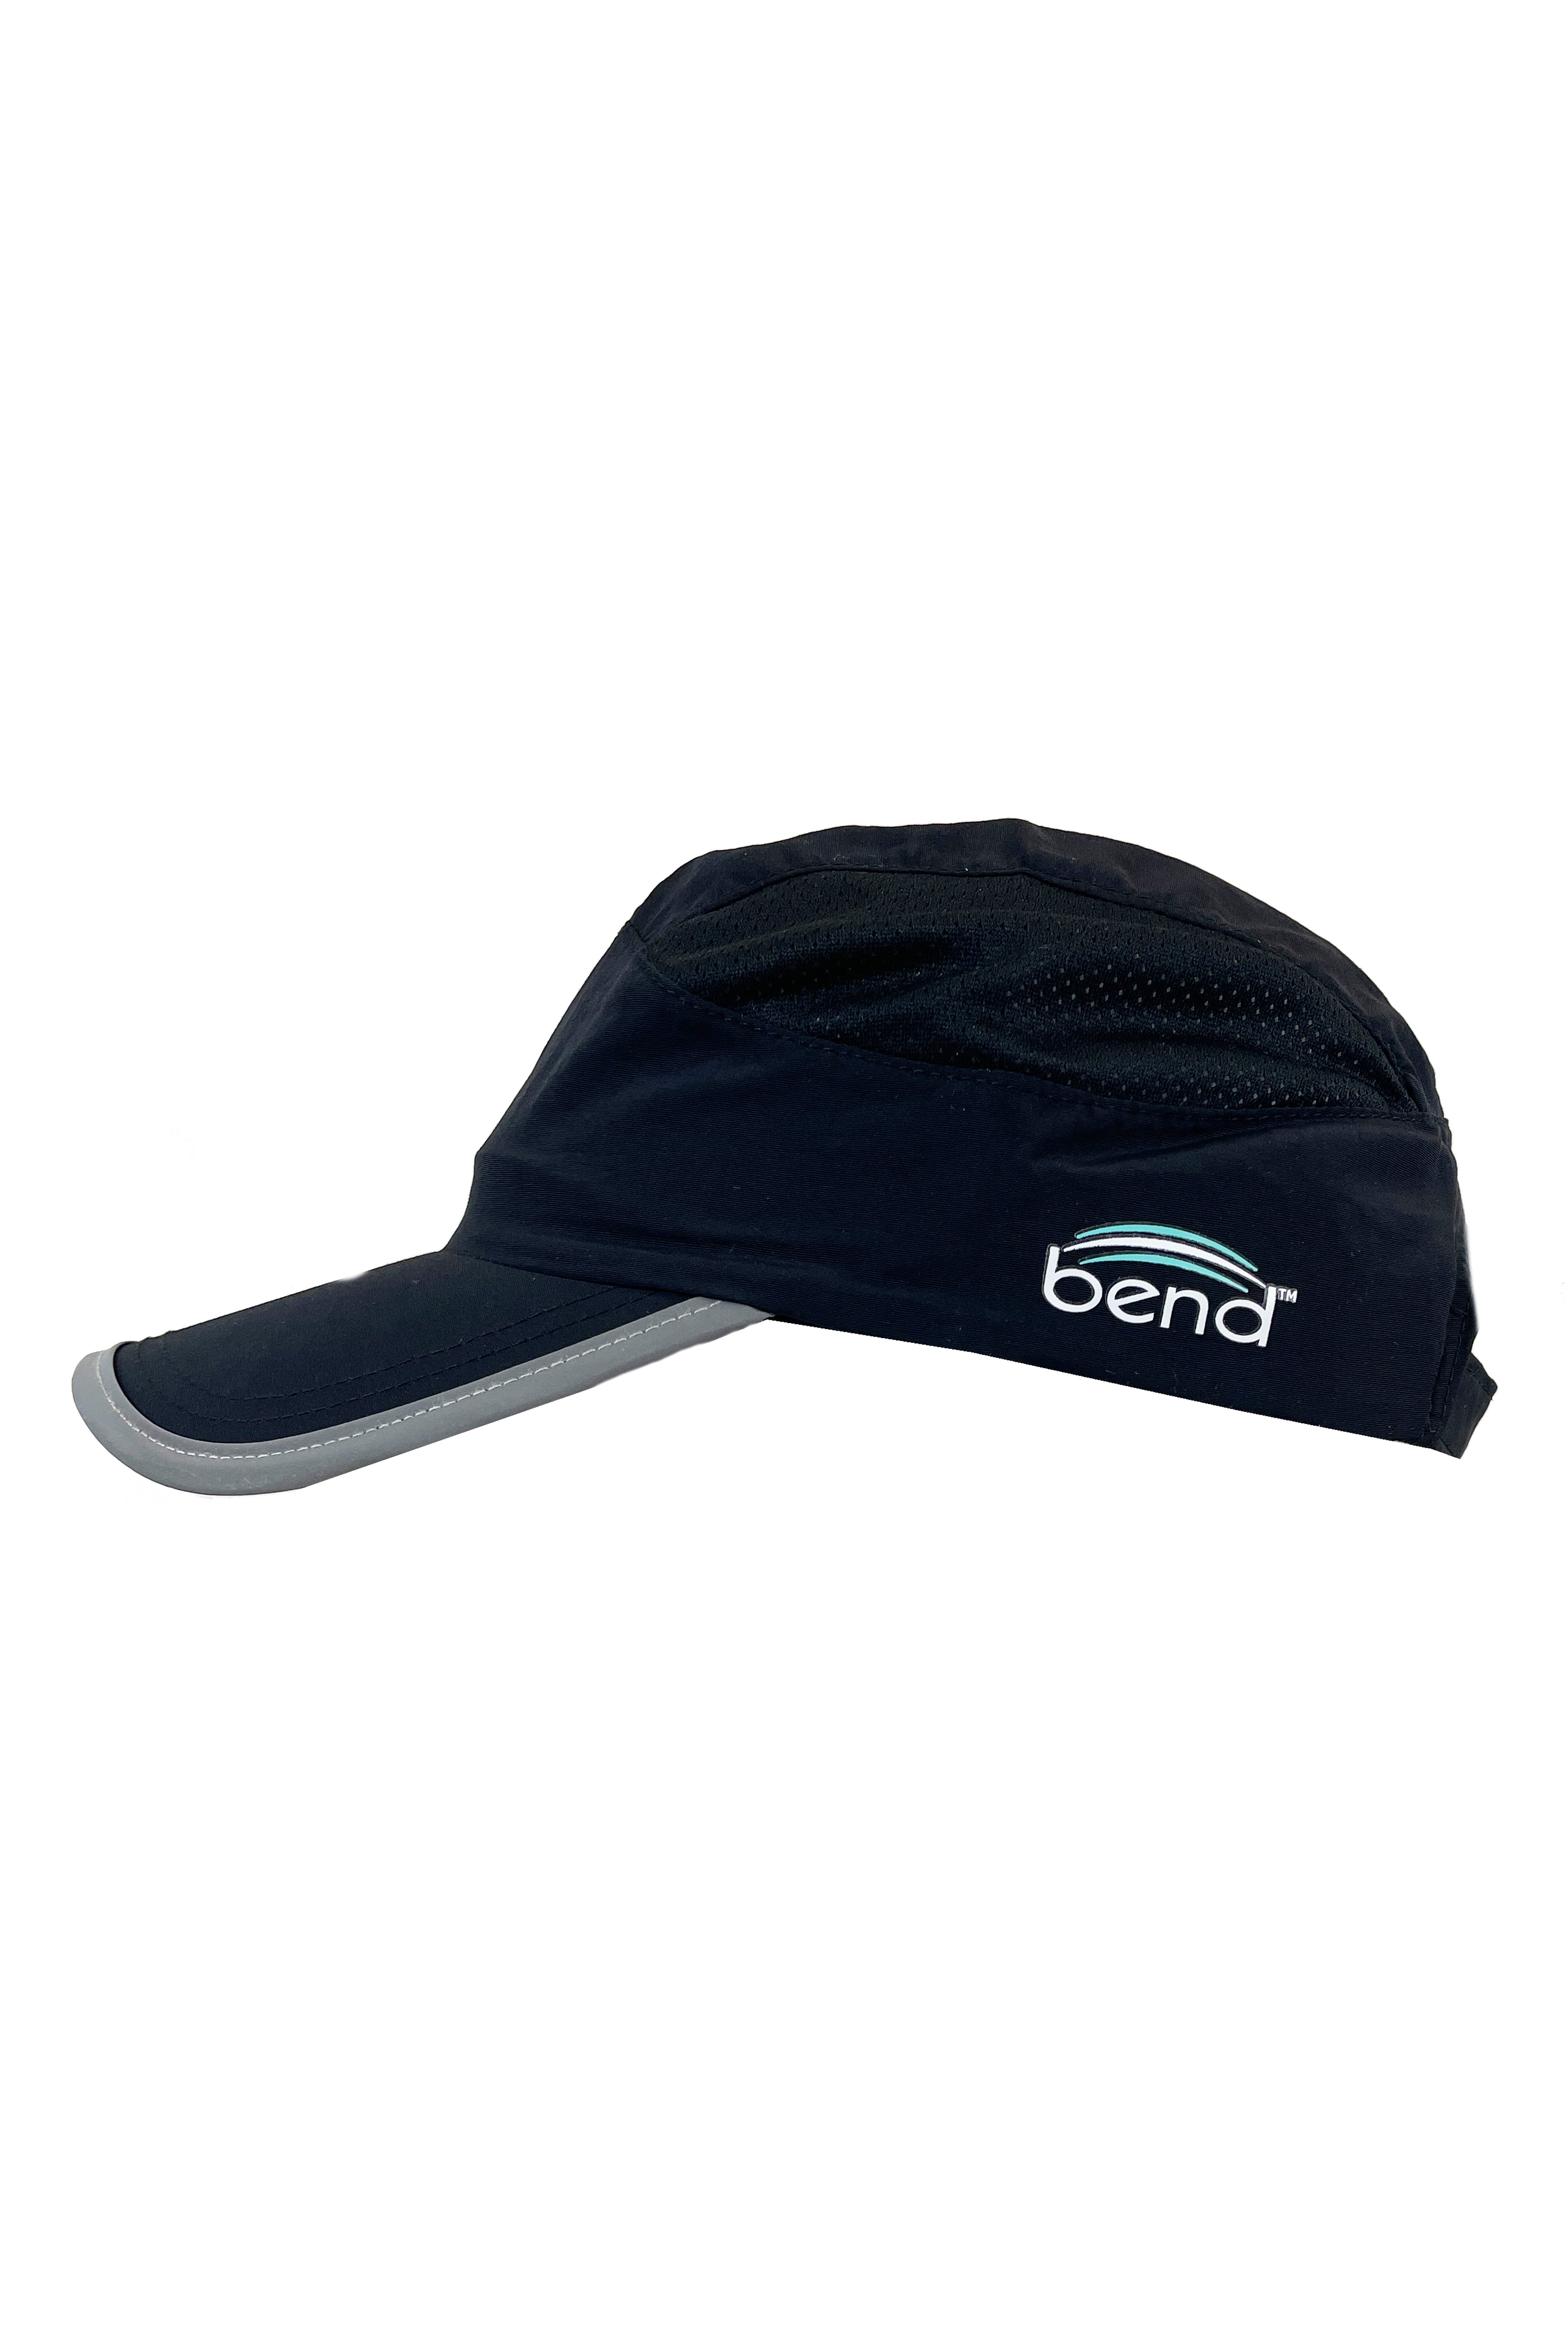 PR4 - Bend Running Hat/Various Colors